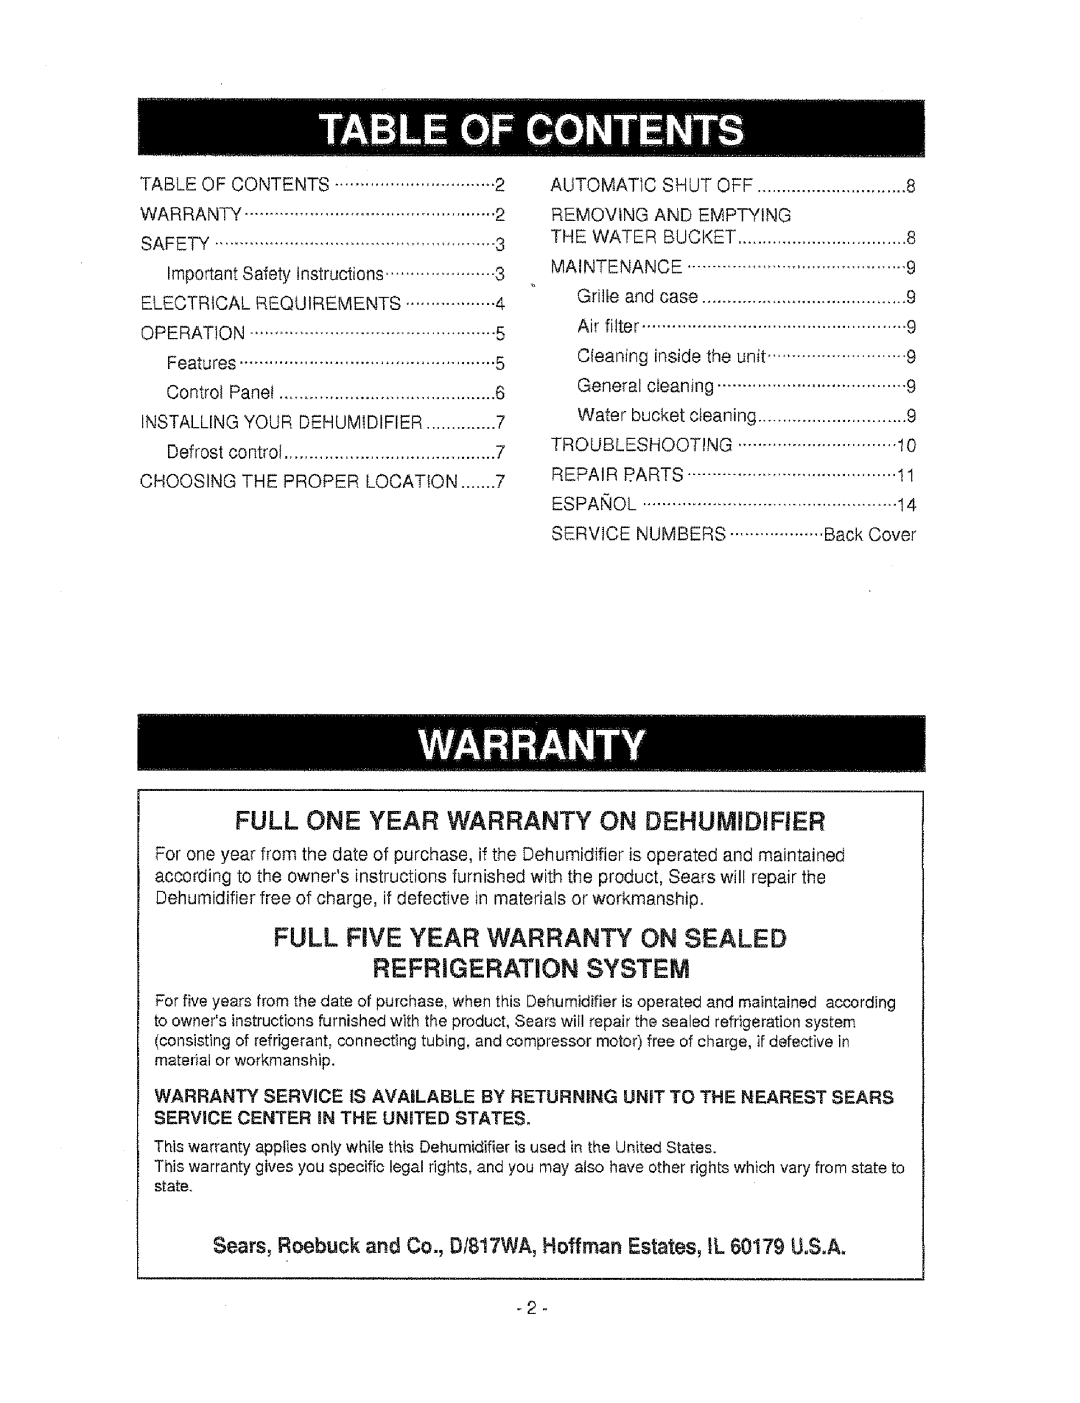 Kenmore 580.53650 FULL FiVE YEAR WARRANTY ON SEALED, Full One Year Warranty On Dehumidifier, Refrigeration System 